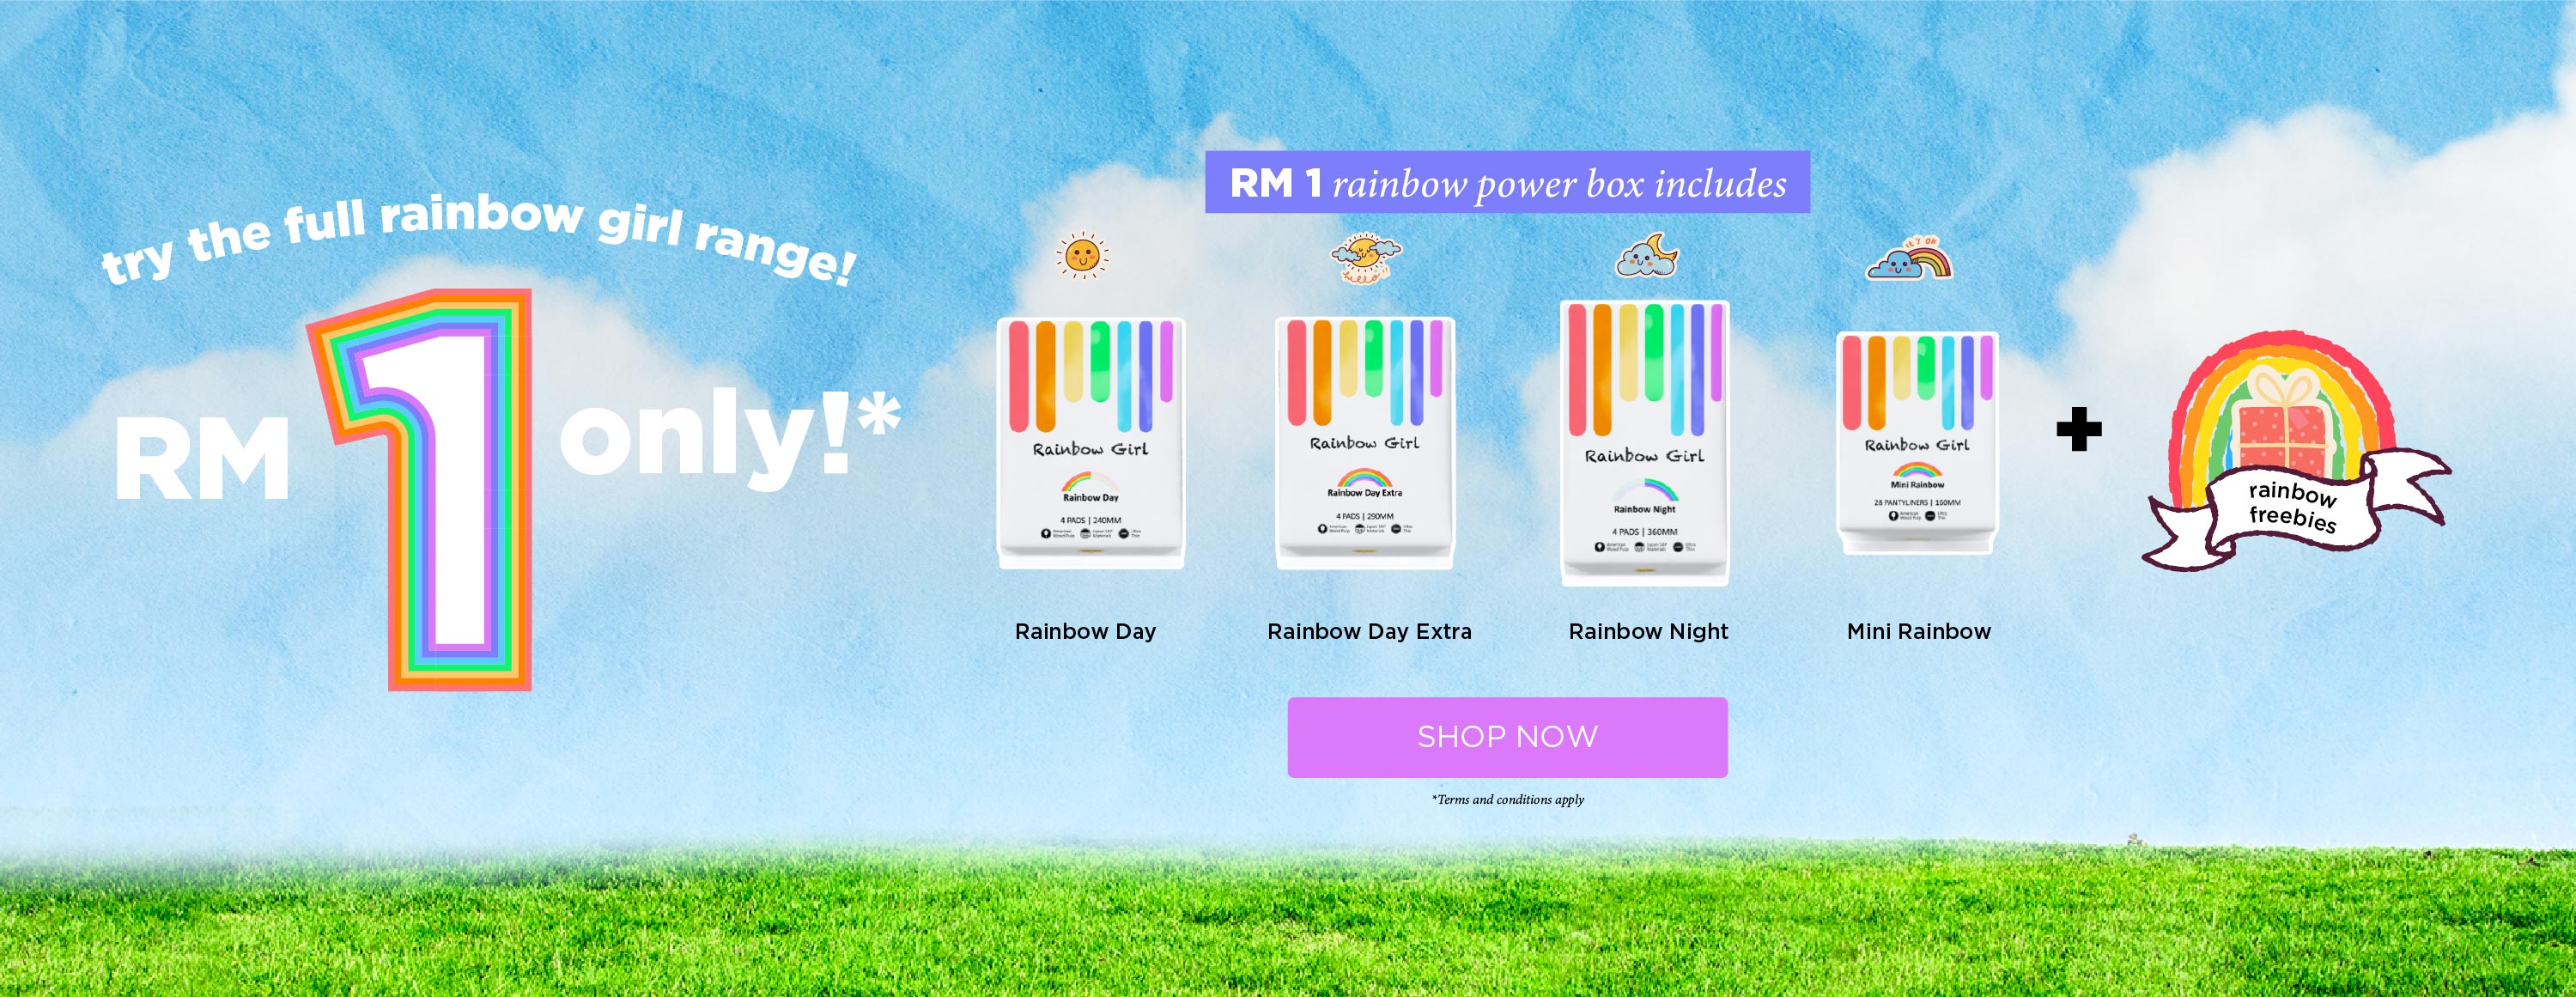 Rainbow Power Box